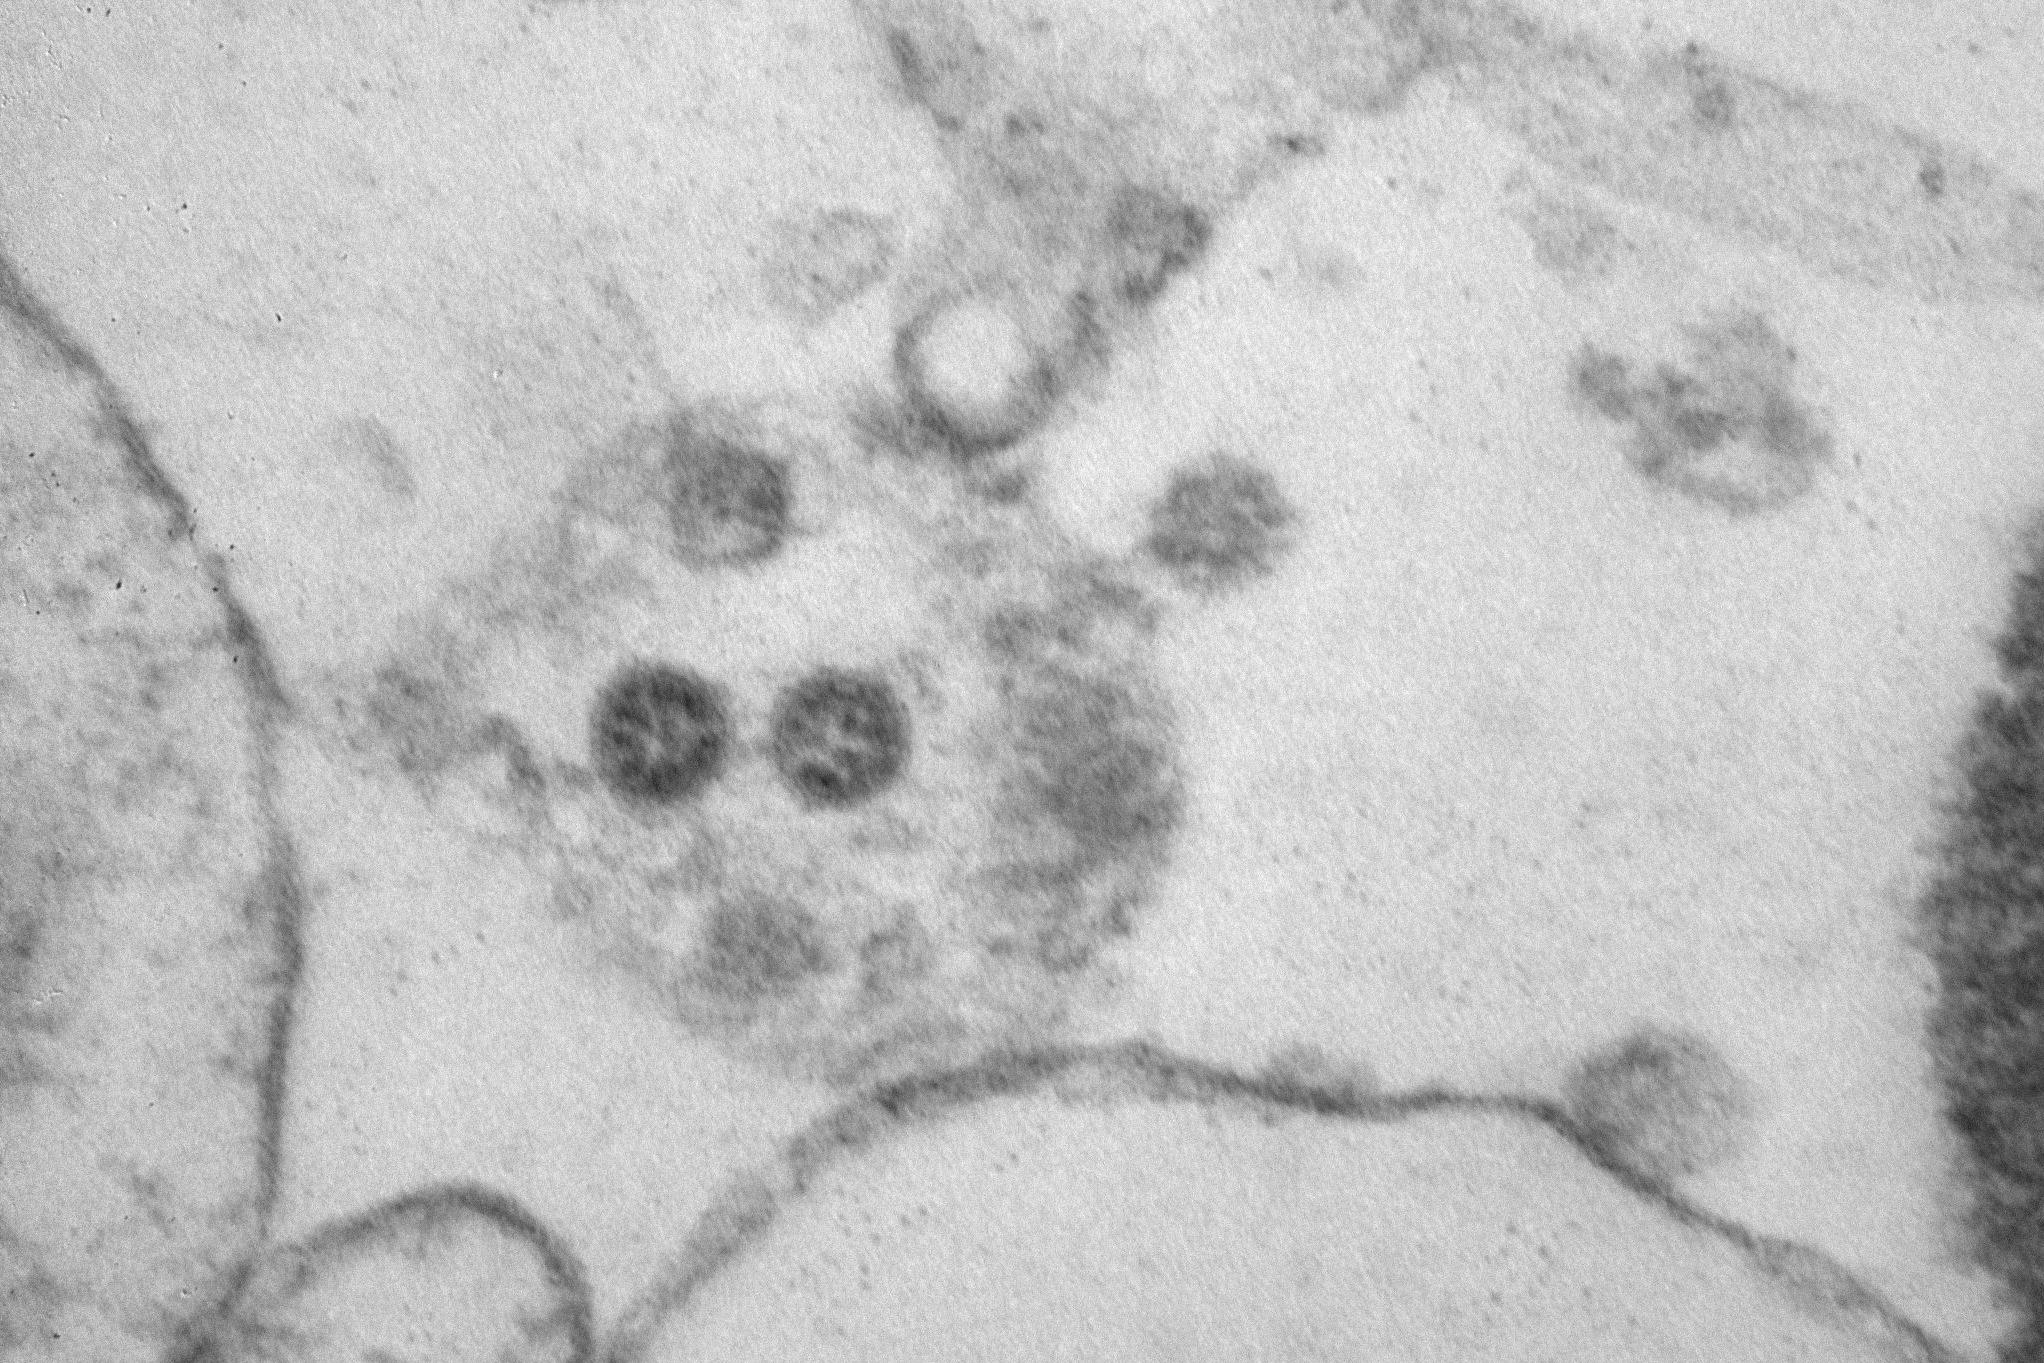 Коронавирус штаммы омикрон. Ковид Омикрон. Ковид коронавирус Омикрон. Штамм вируса Омикрон под микроскопом. Вирус ковид Омикрон под микроскопом.